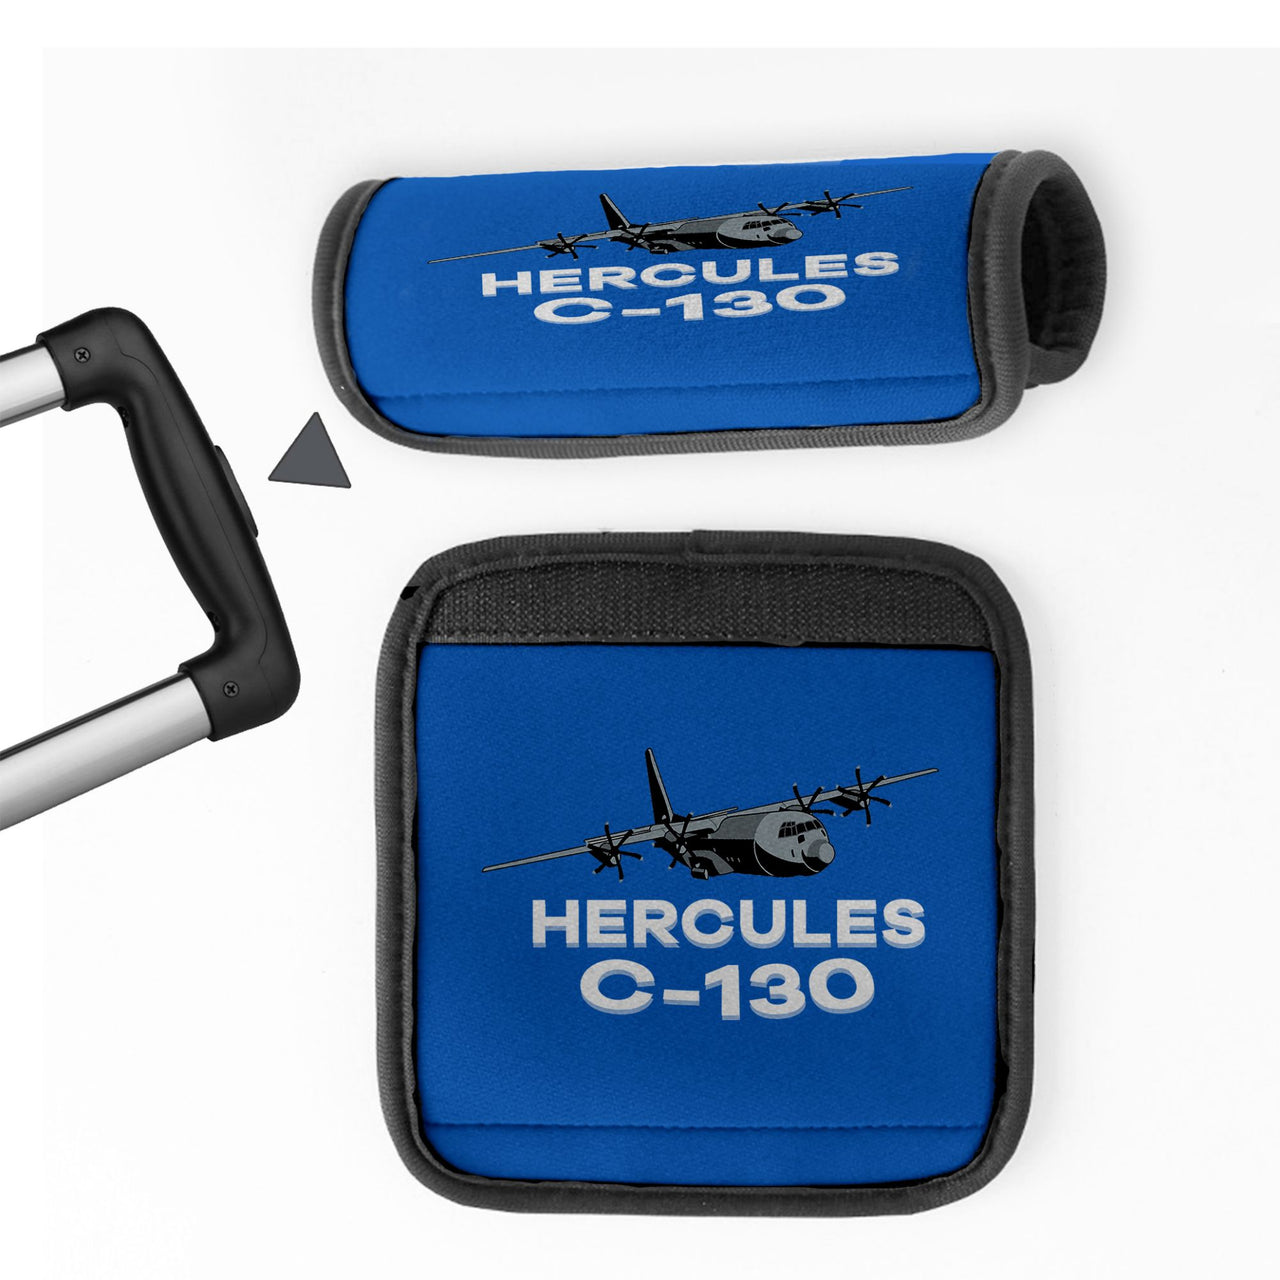 The Hercules C130 Designed Neoprene Luggage Handle Covers